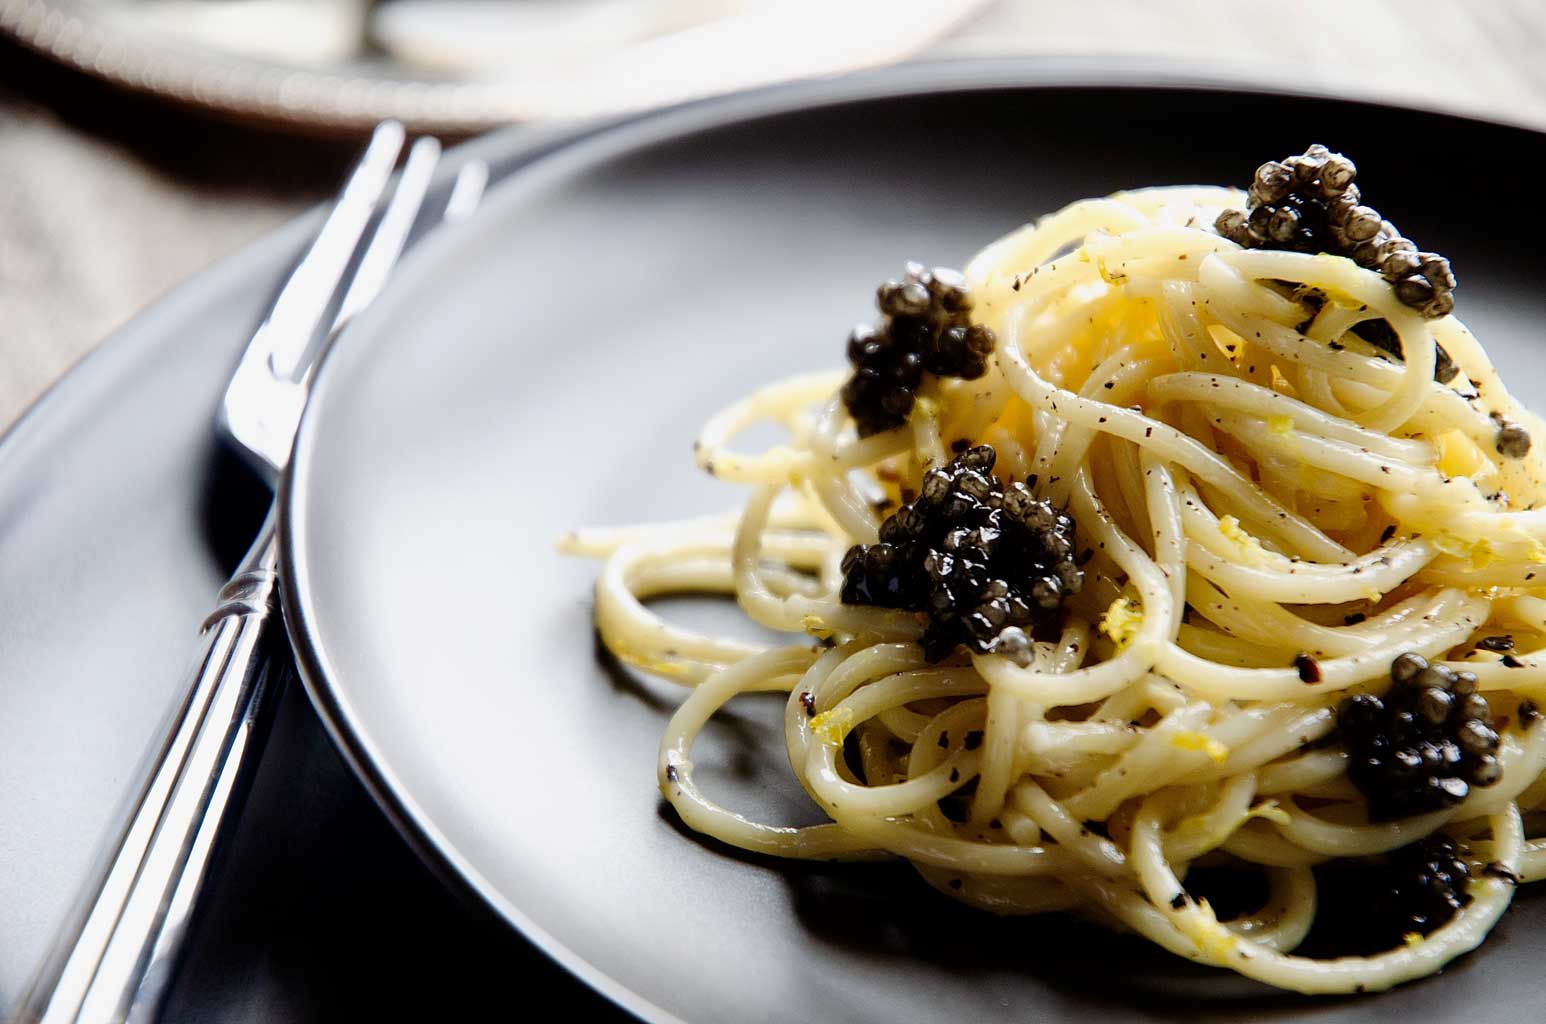 Caviar Matt Pasta kit